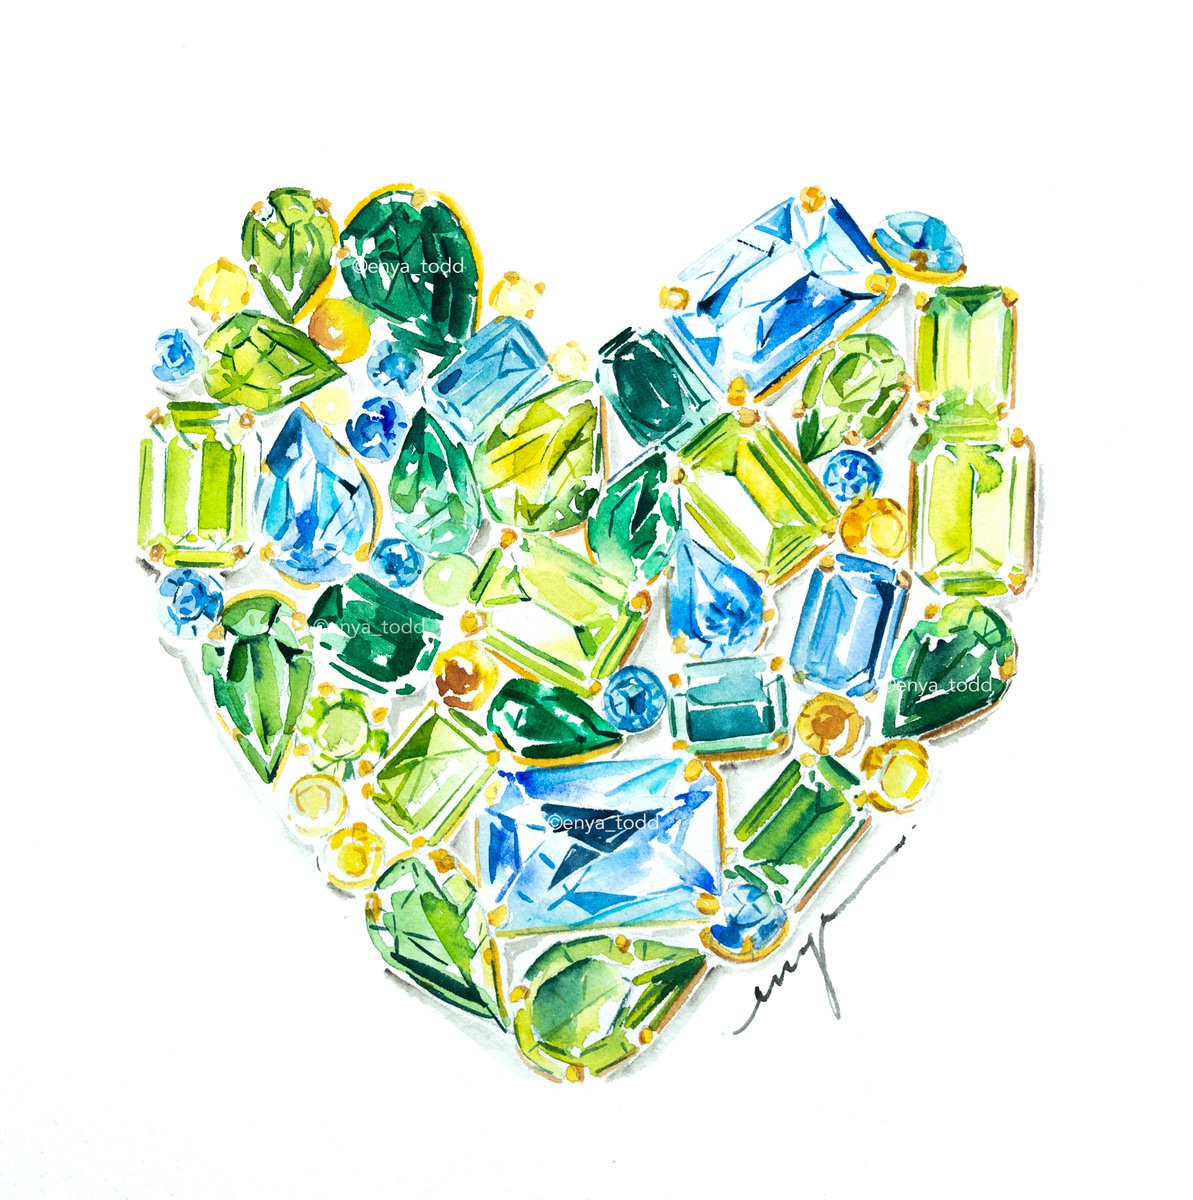 Heart gems by Enya Todd